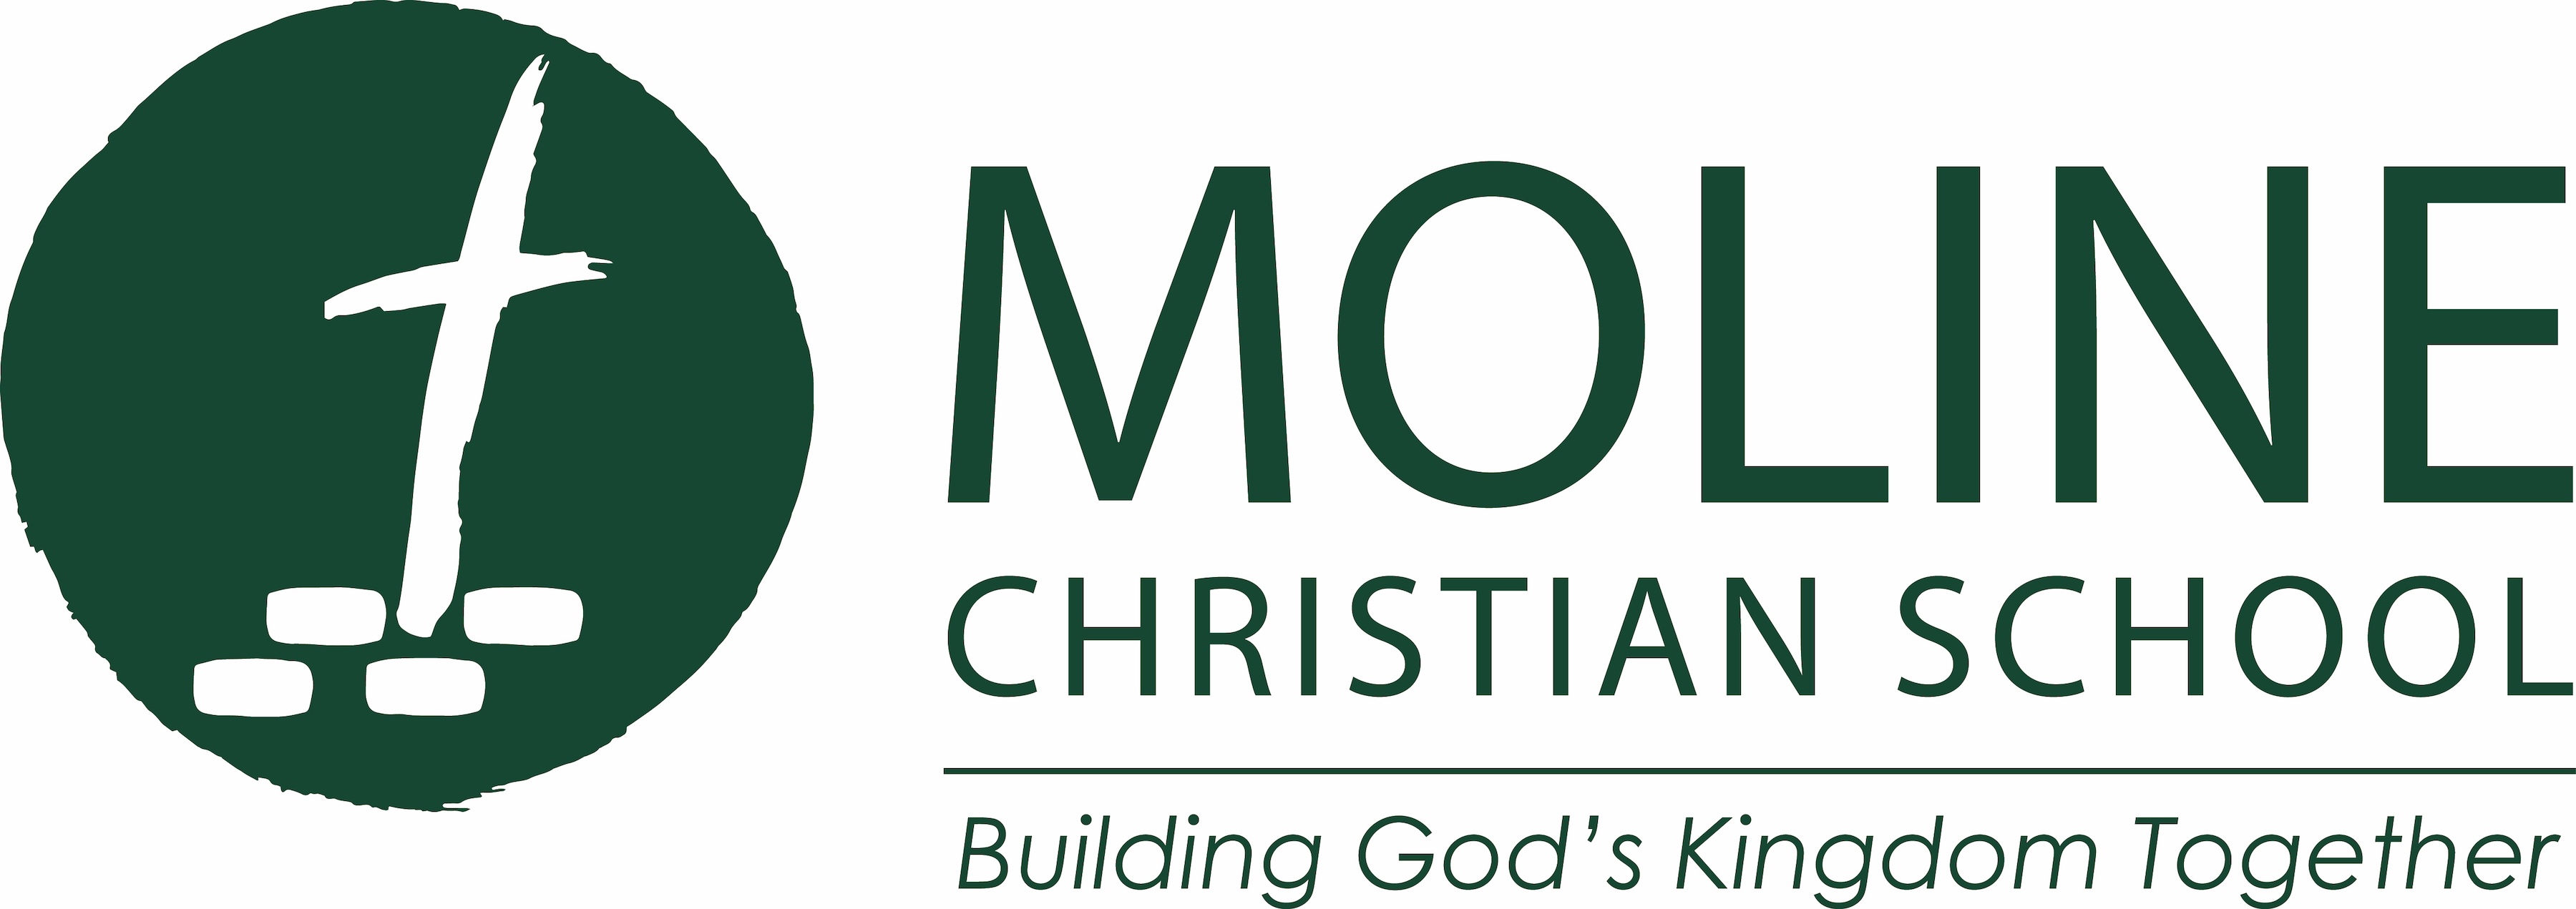 Moline Christian School logo